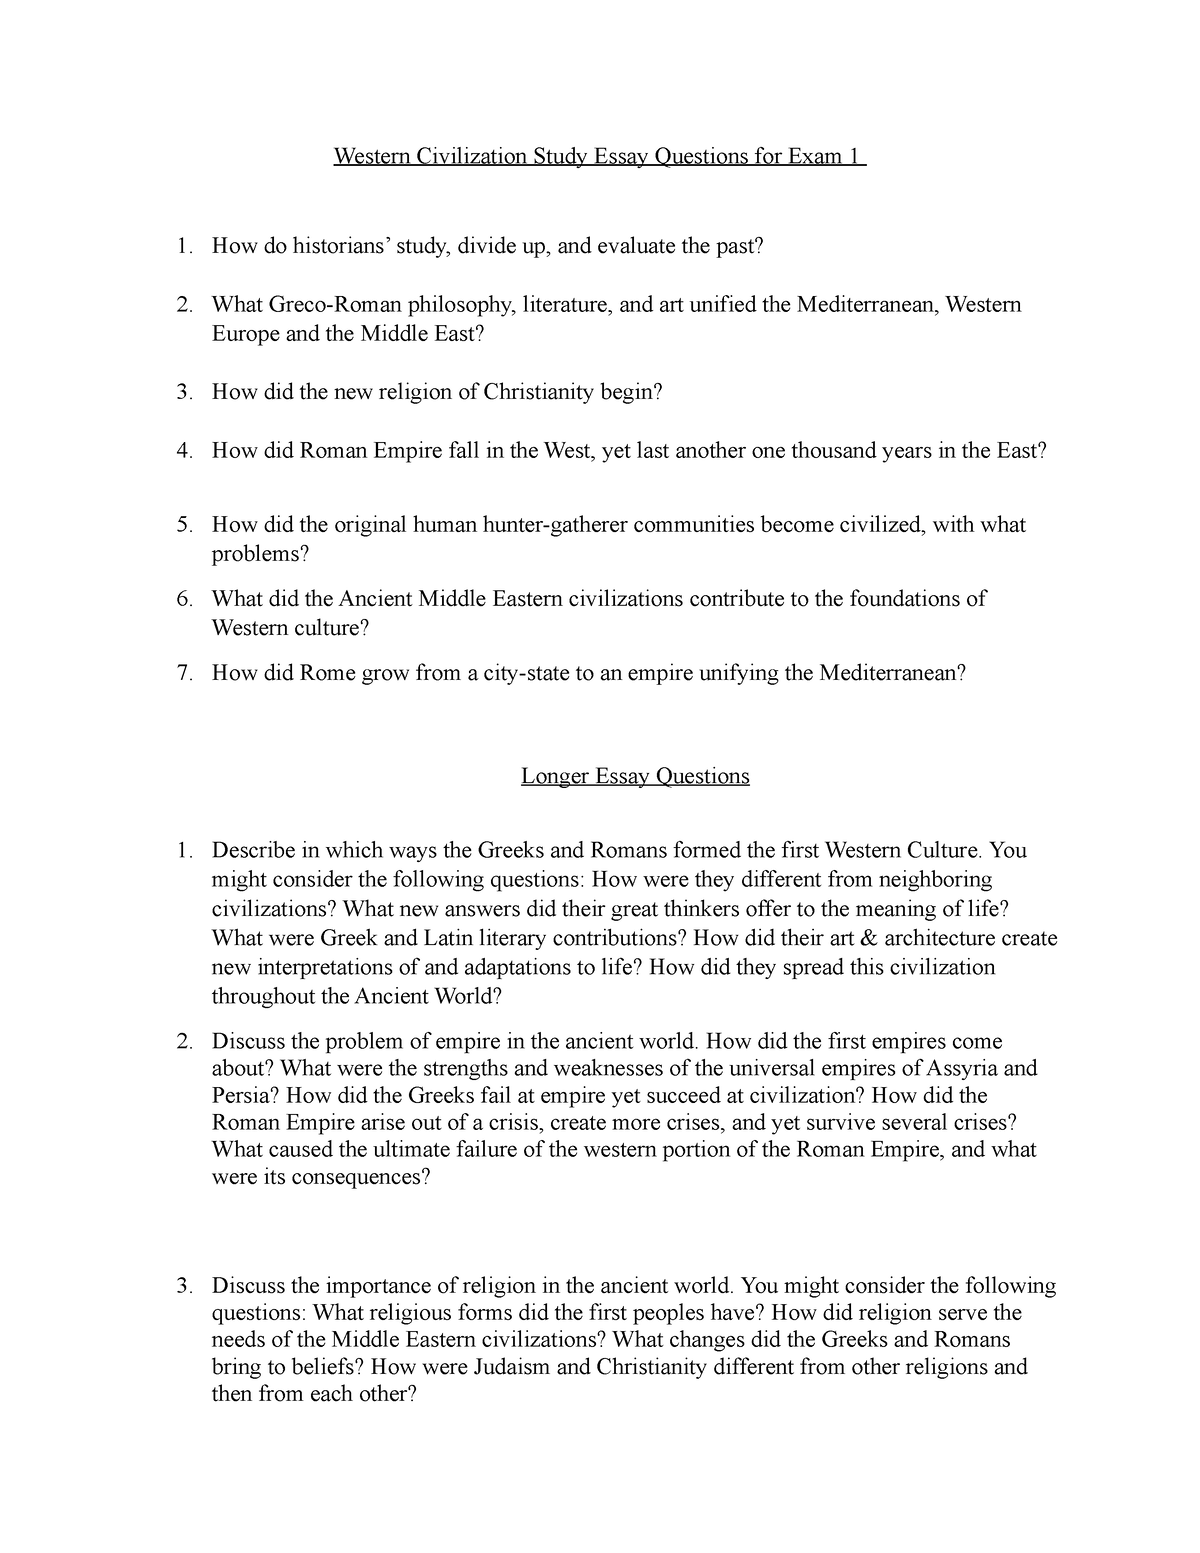 Exam 1 Practice Questions - Western Civilization Study Essay Questions ...